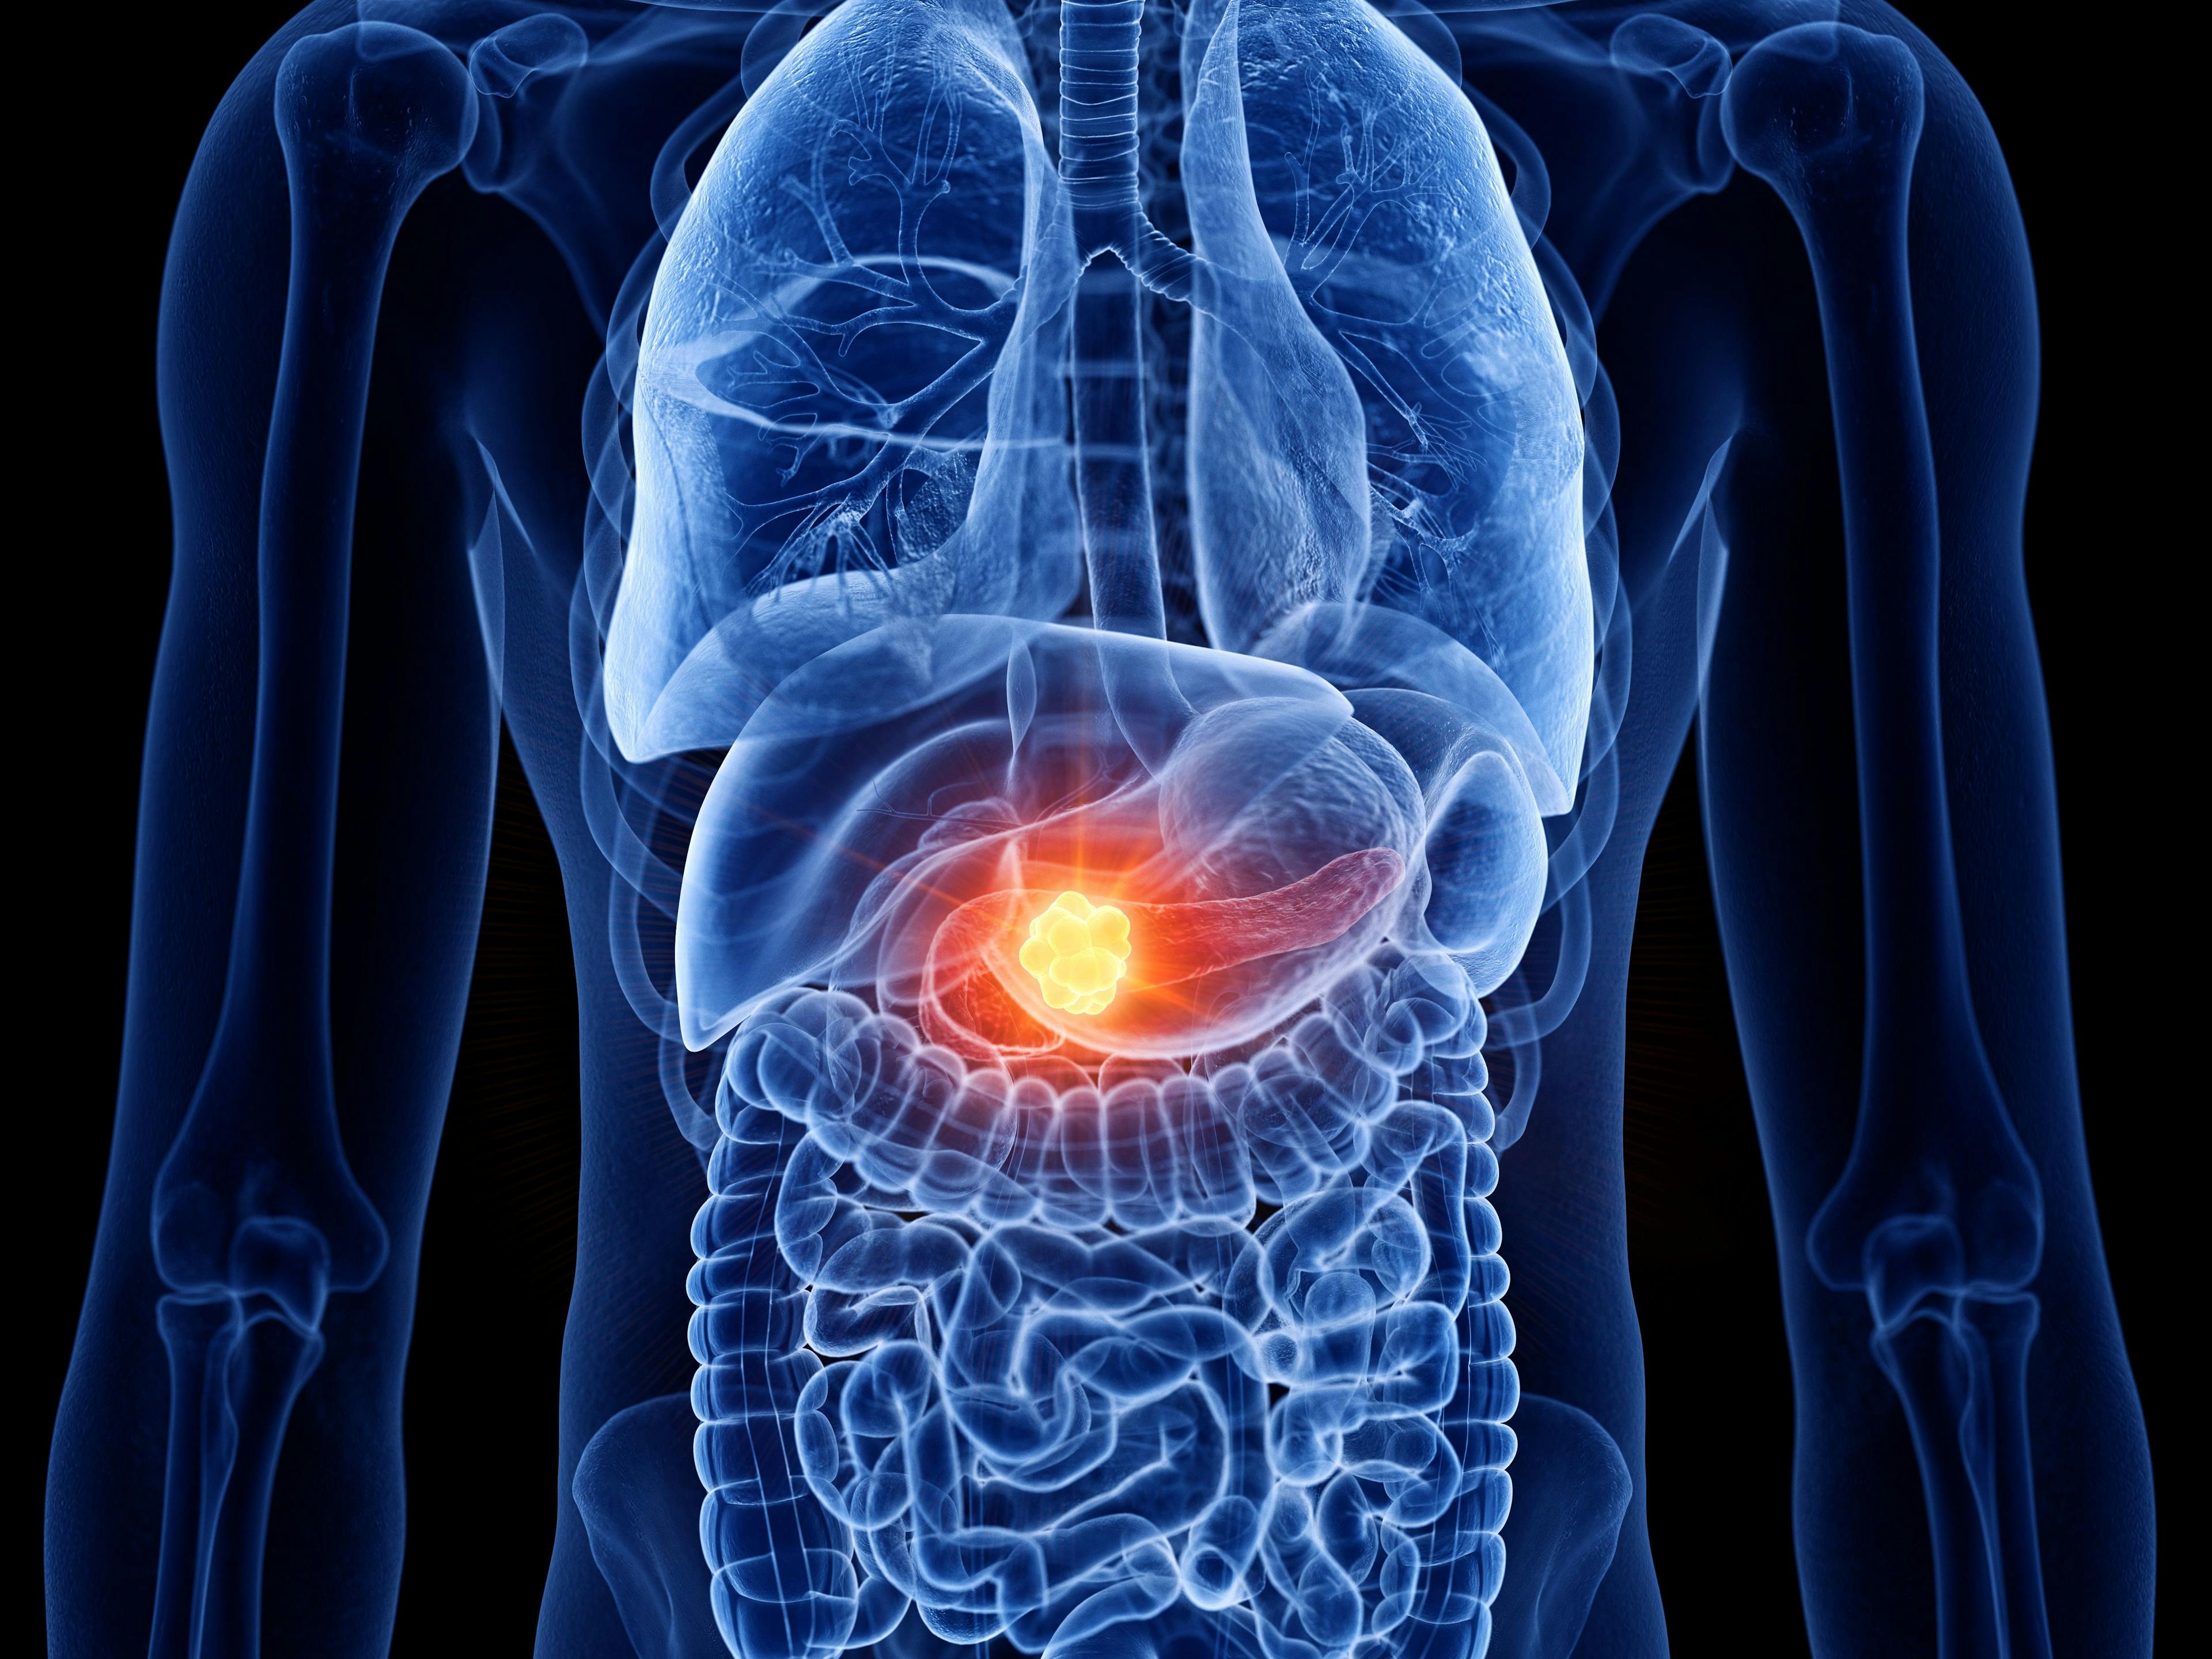 3d rendered medically accurate illustration of pancreas cancer - Image credit: Sebastian Kaulitzki | stock.adobe.com